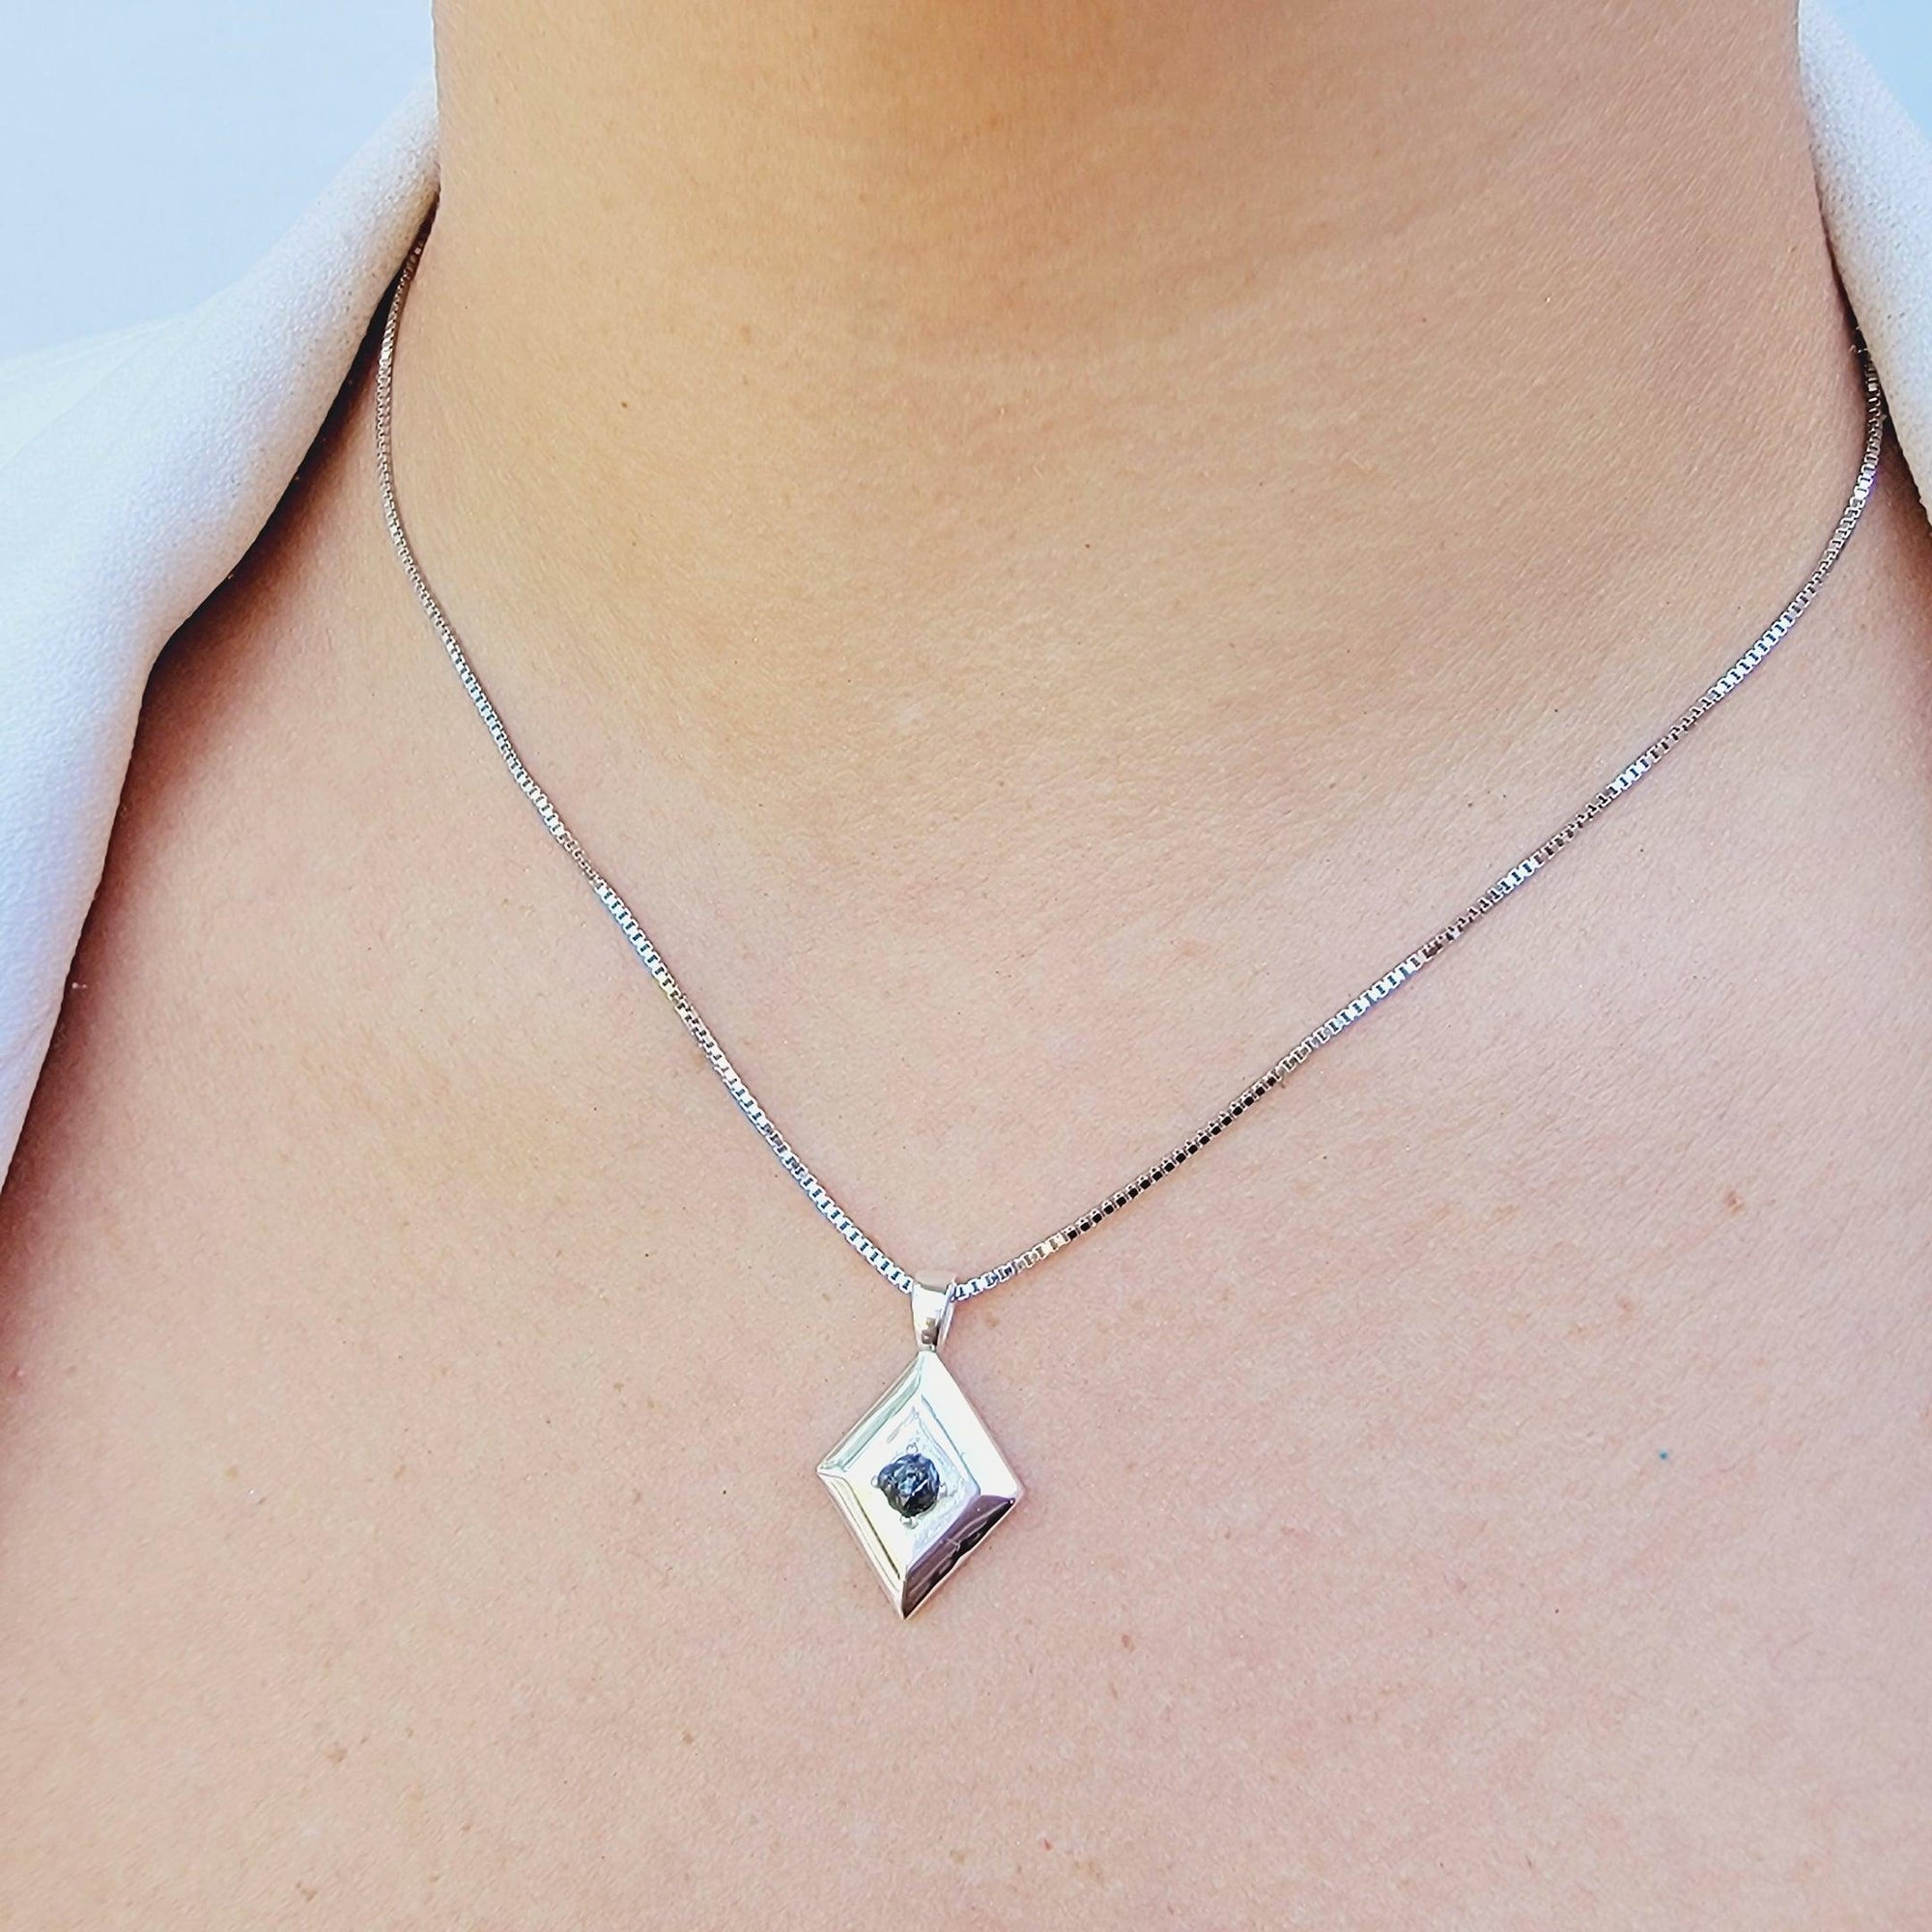 Natural Diamond Pendant Necklace - Uniquelan Jewelry